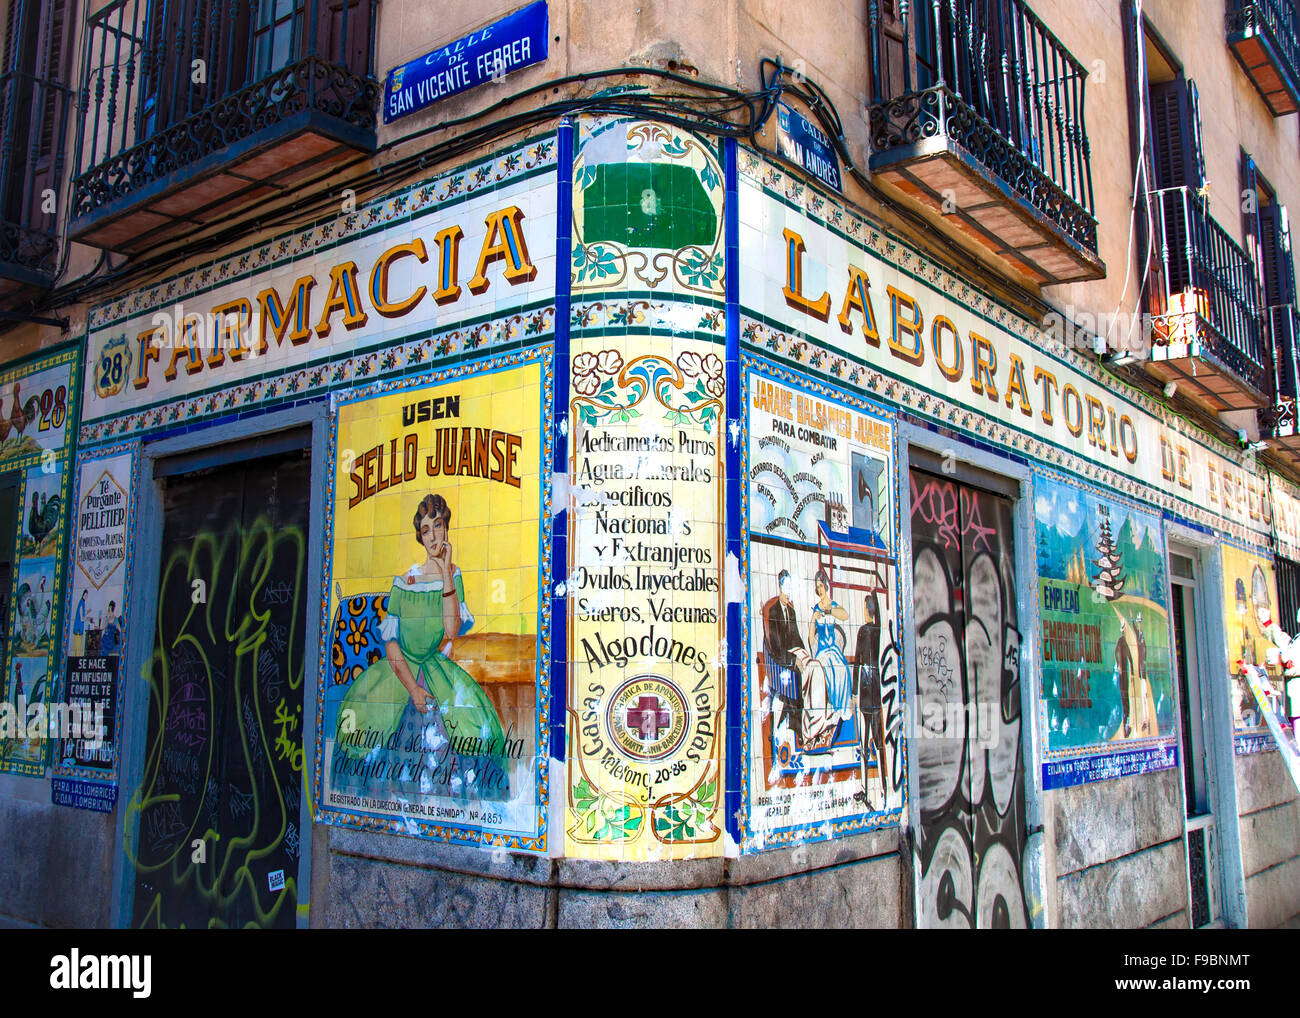 Juanse Cafe La Farmacia, Malasaña, Madrid, Spain Stock Photo